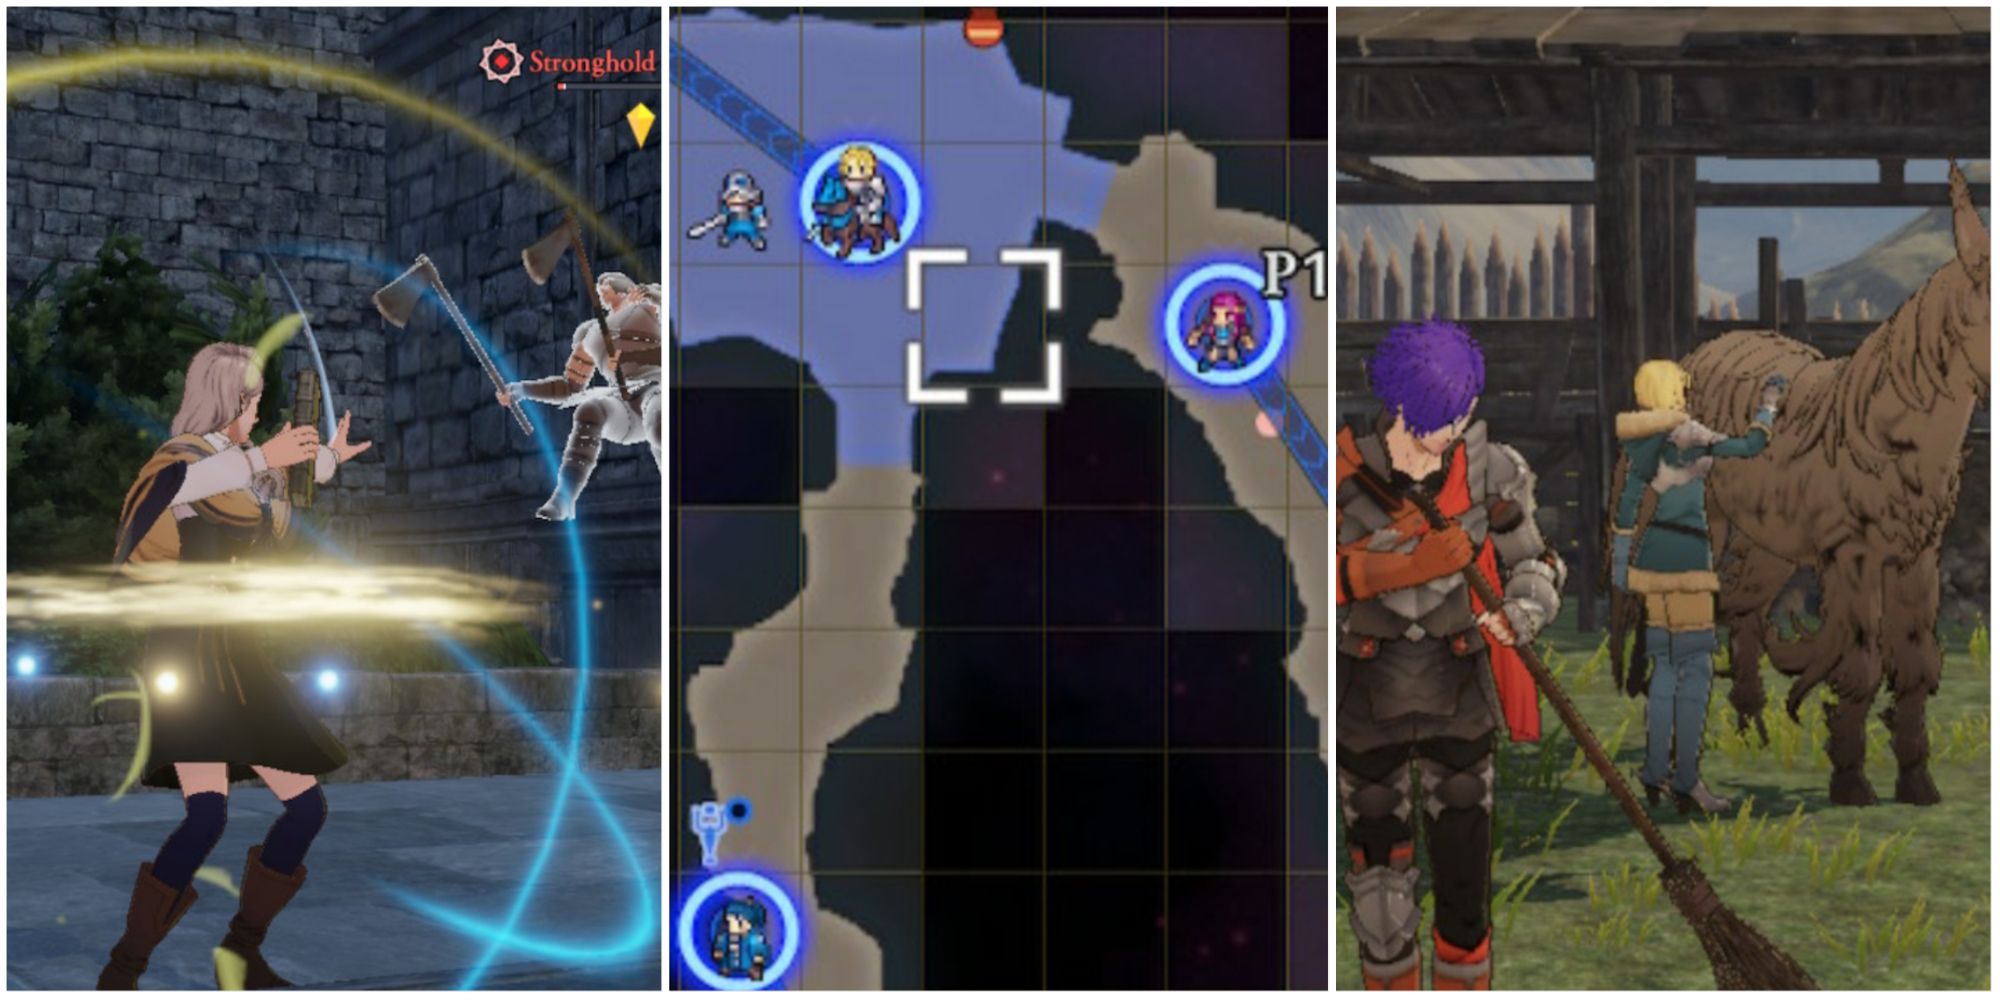 Fire Emblem Warriors Three Hopes - battle gameplay, map menu, and a chore